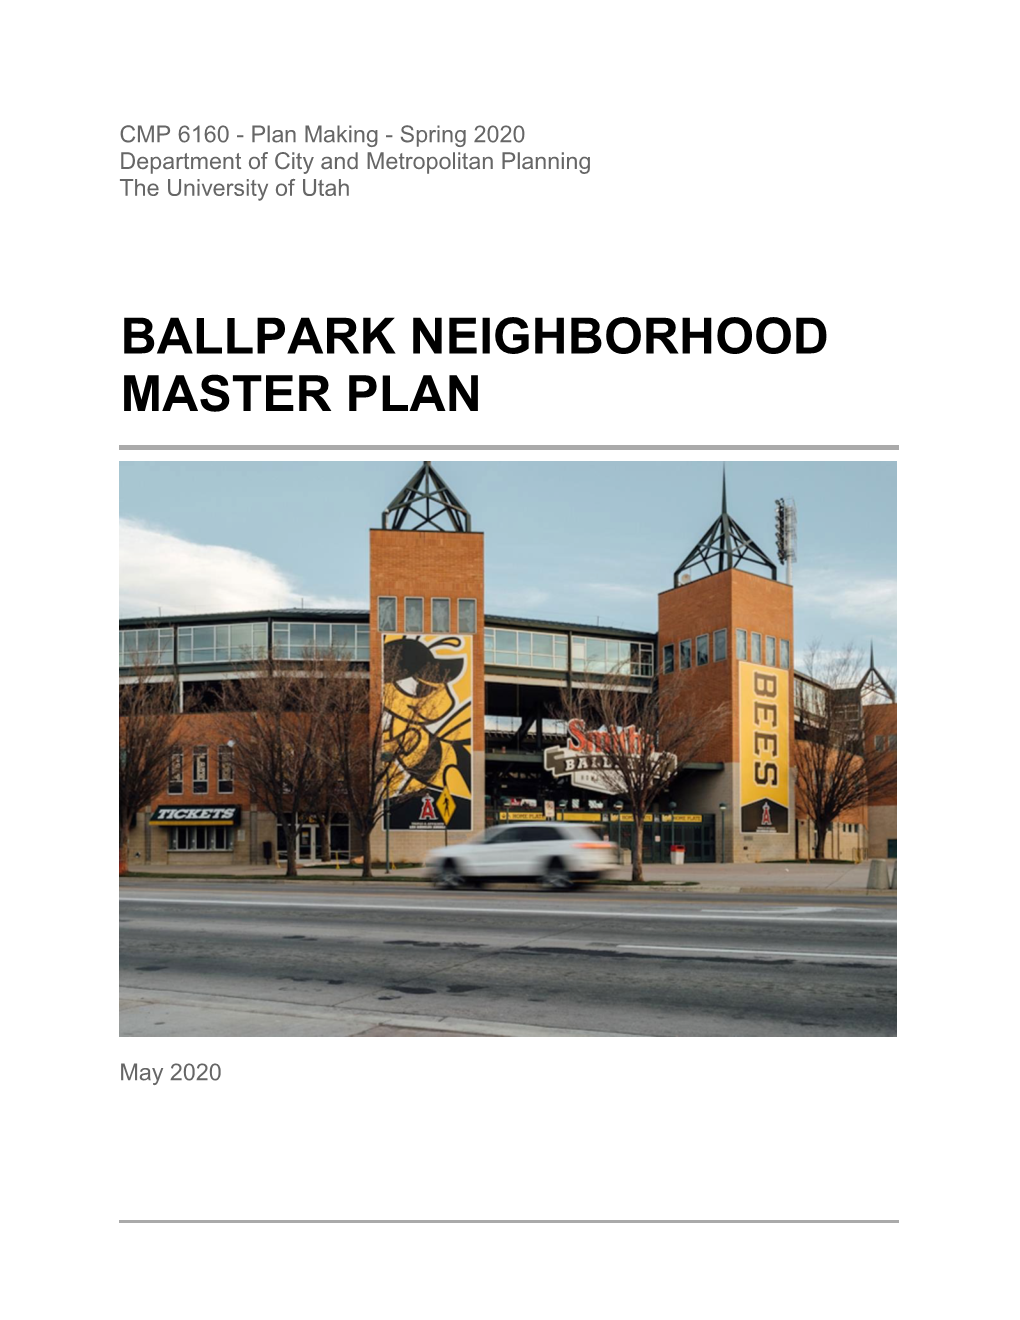 Ballpark Neighborhood Master Plan